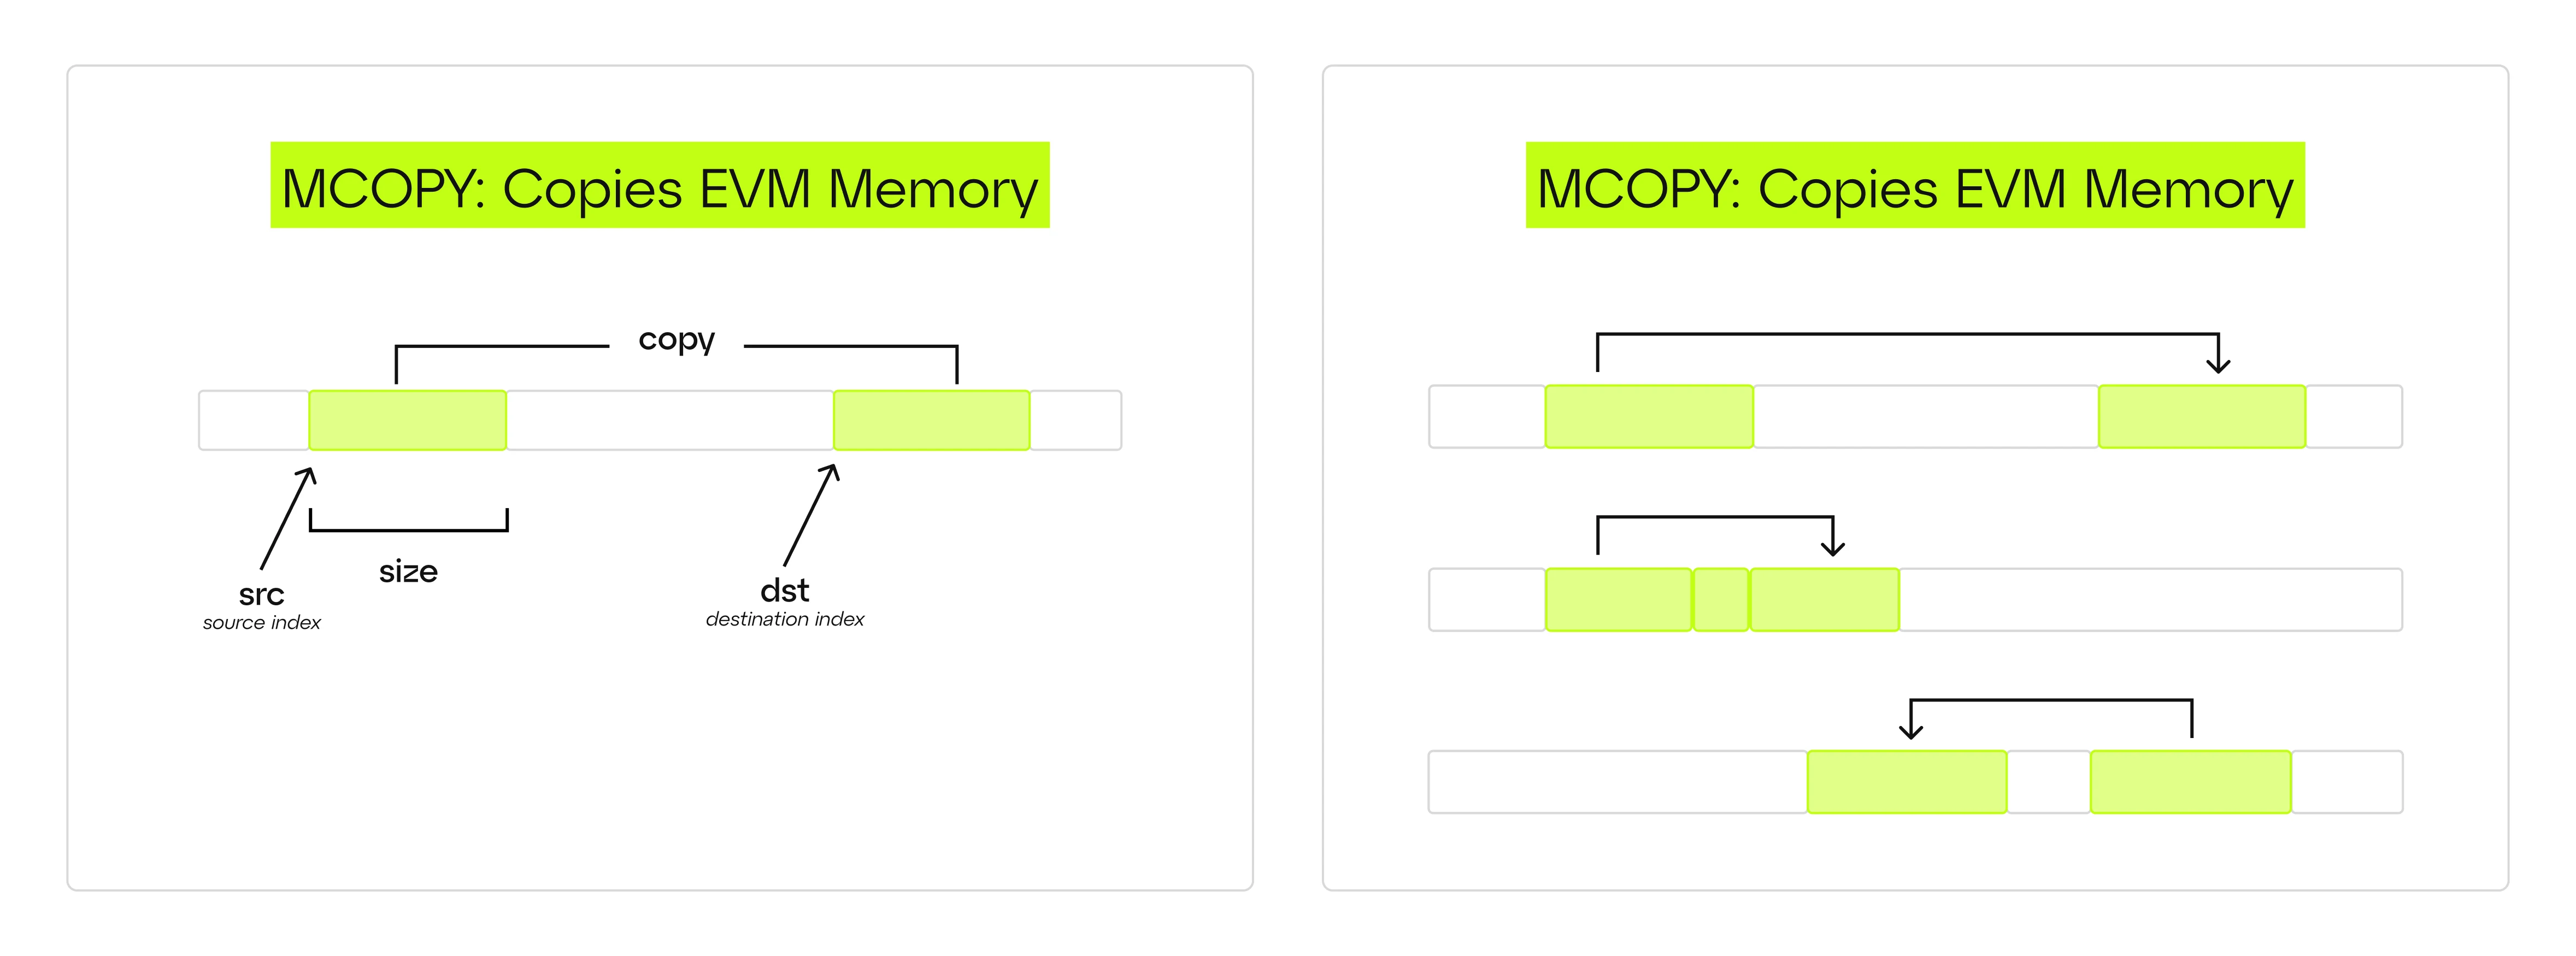 MCOPY image 1 (EIP series I)